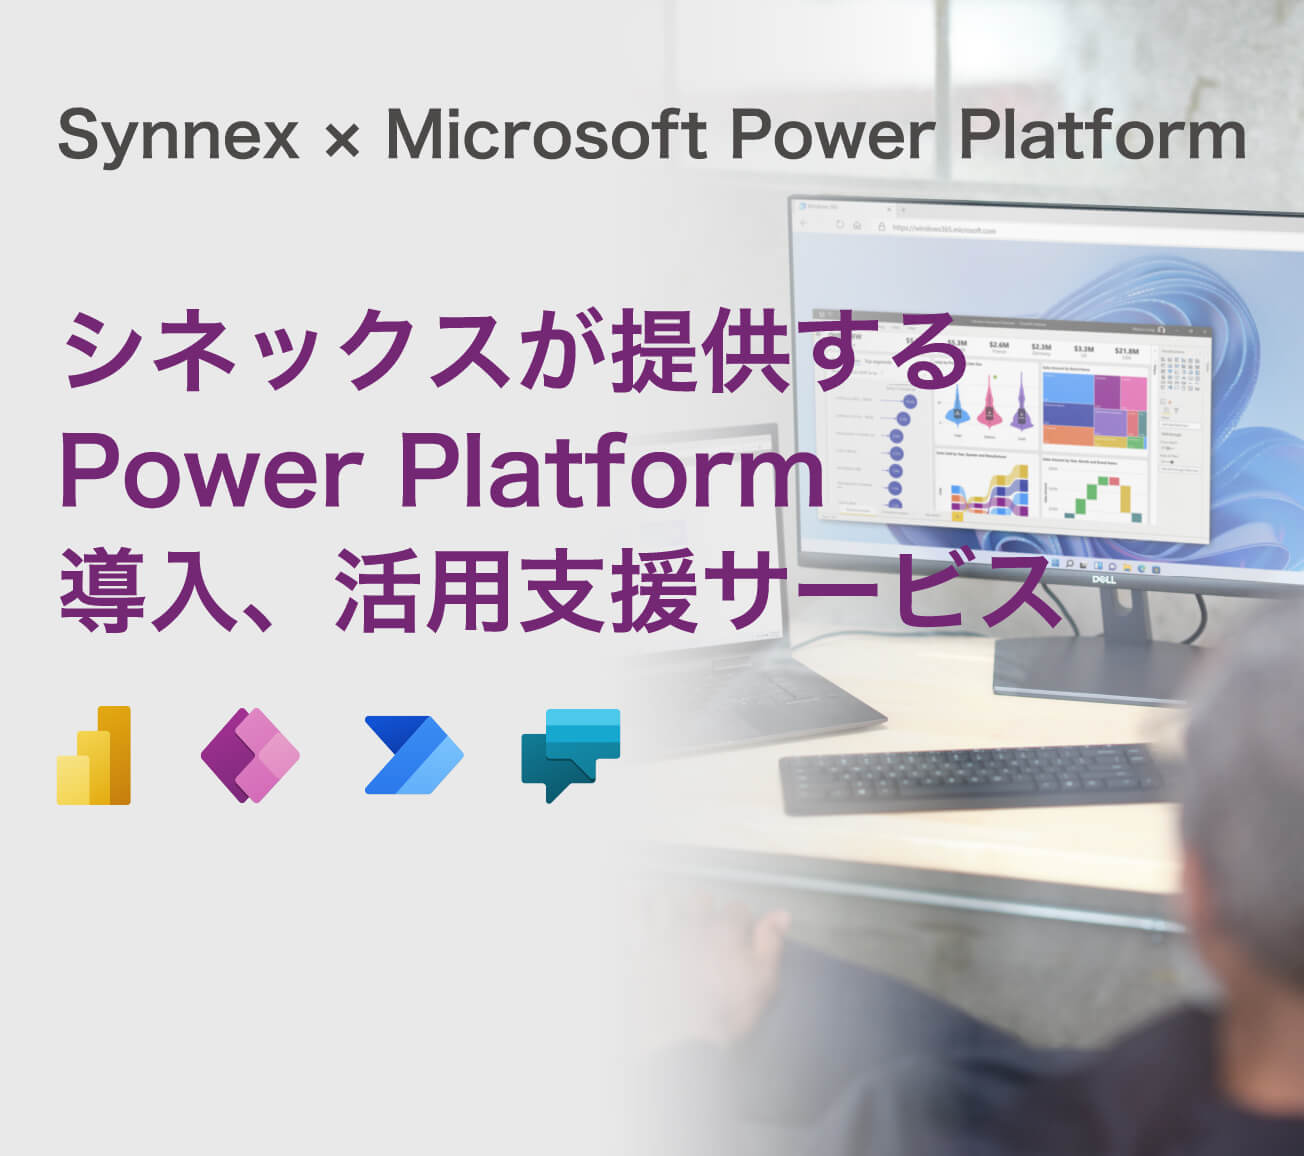 TD SYNNEX × Microsoft Power Platform TD シネックスが提供するPower Platform 導入、活用支援サービス